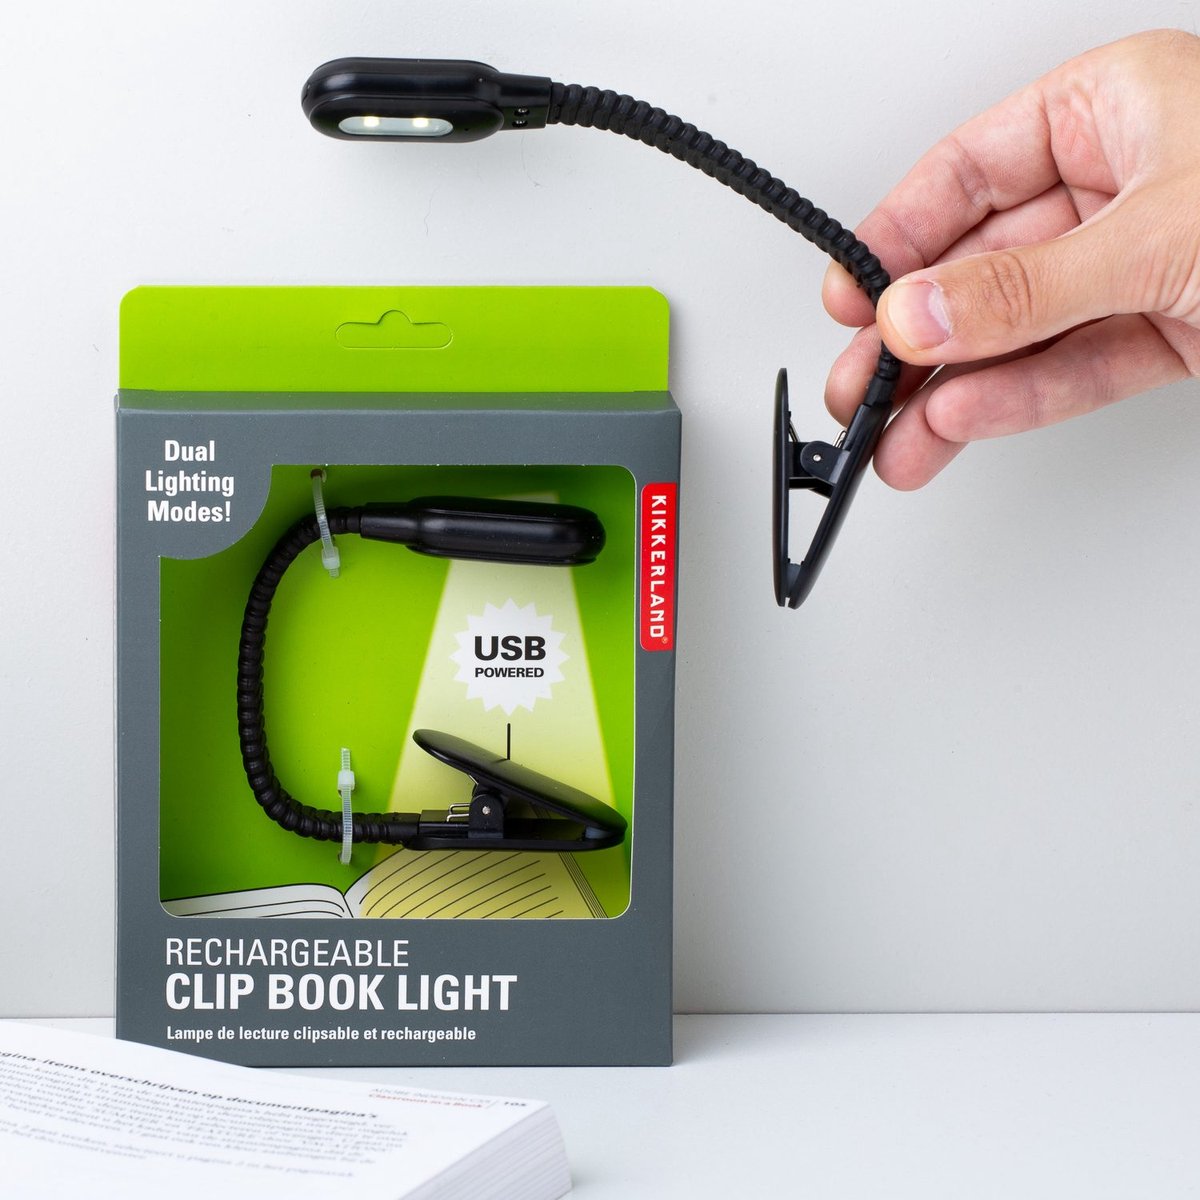 Clip Book light